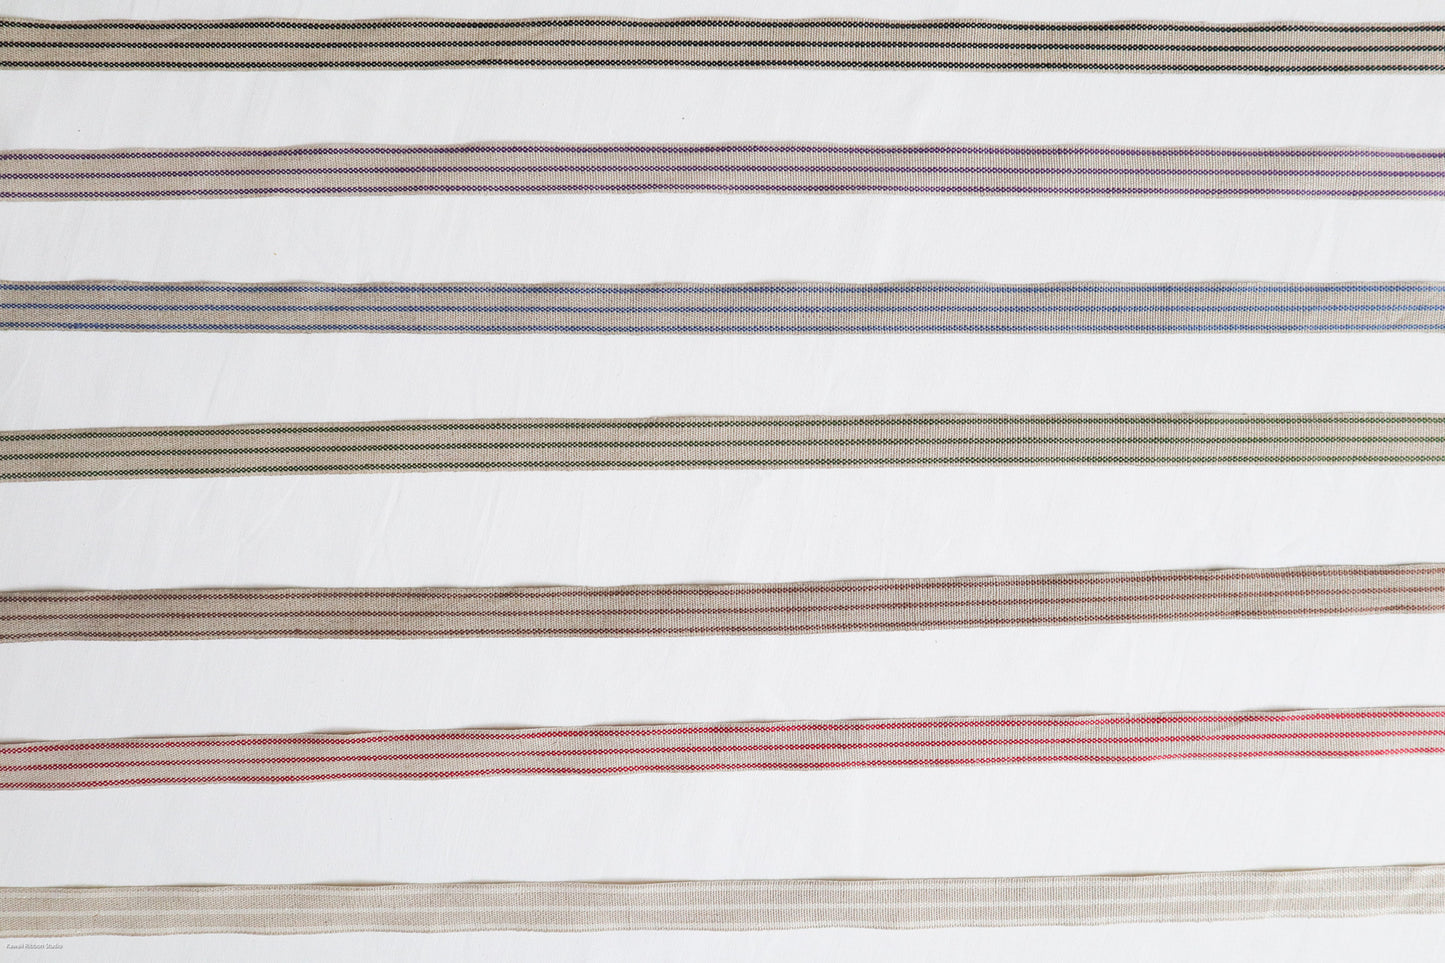 18mm stripe ribbon/ tape in 100% washed linen